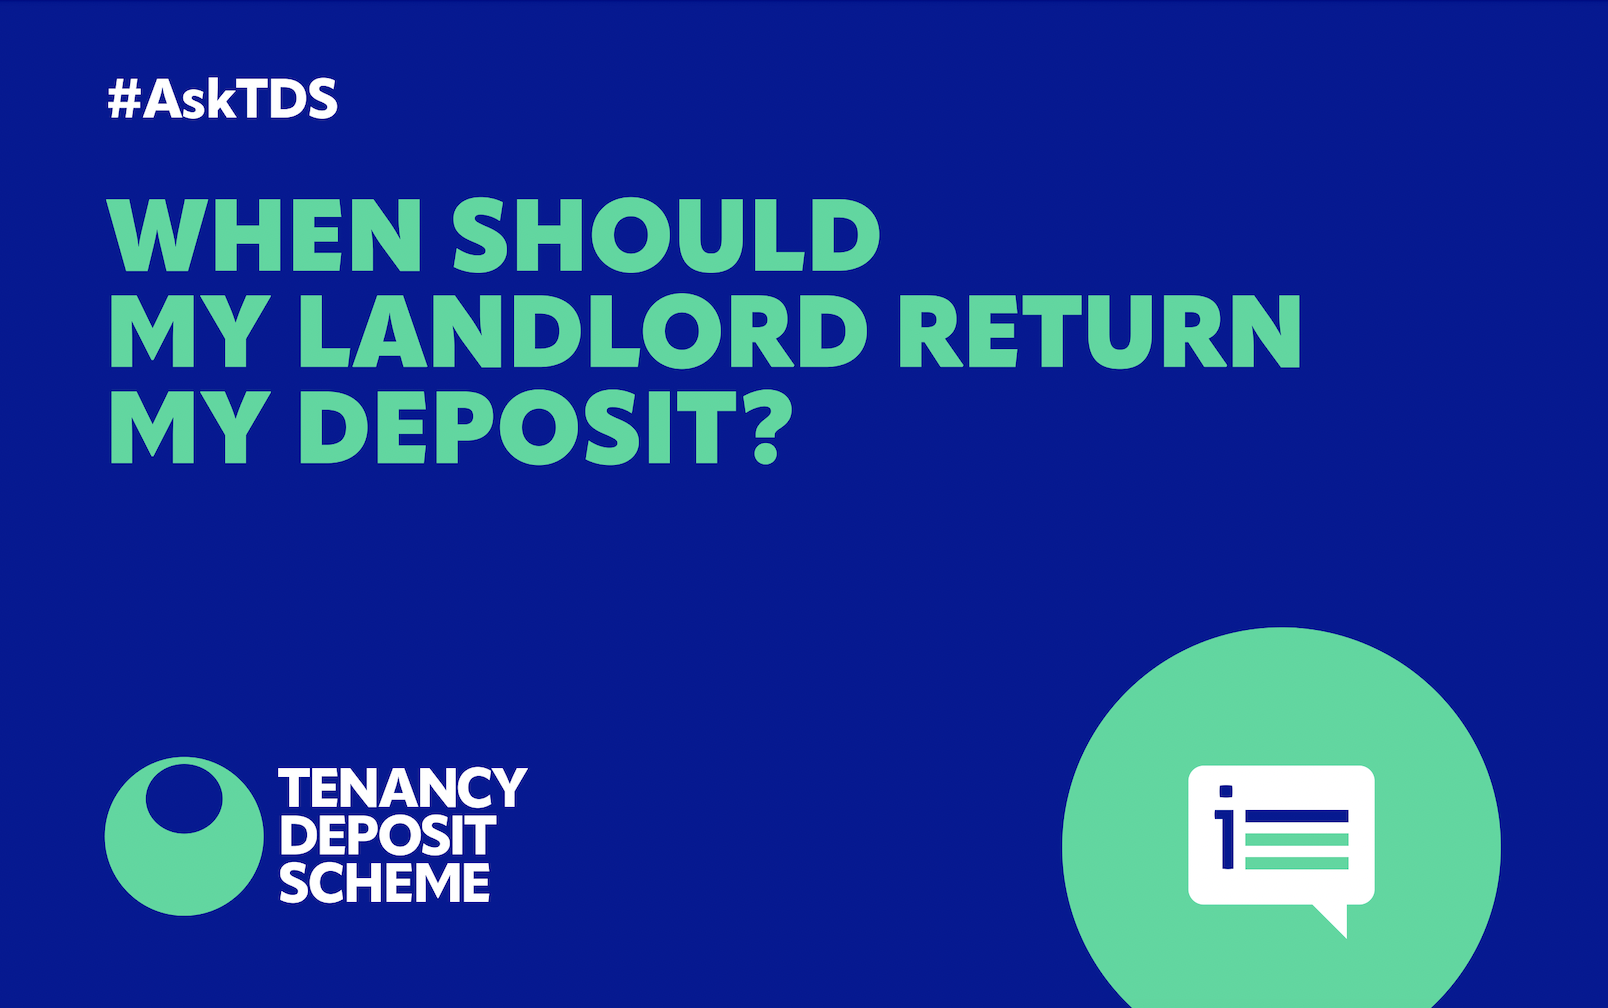 asktds-when-should-my-landlord-return-my-deposit-tenancy-deposit